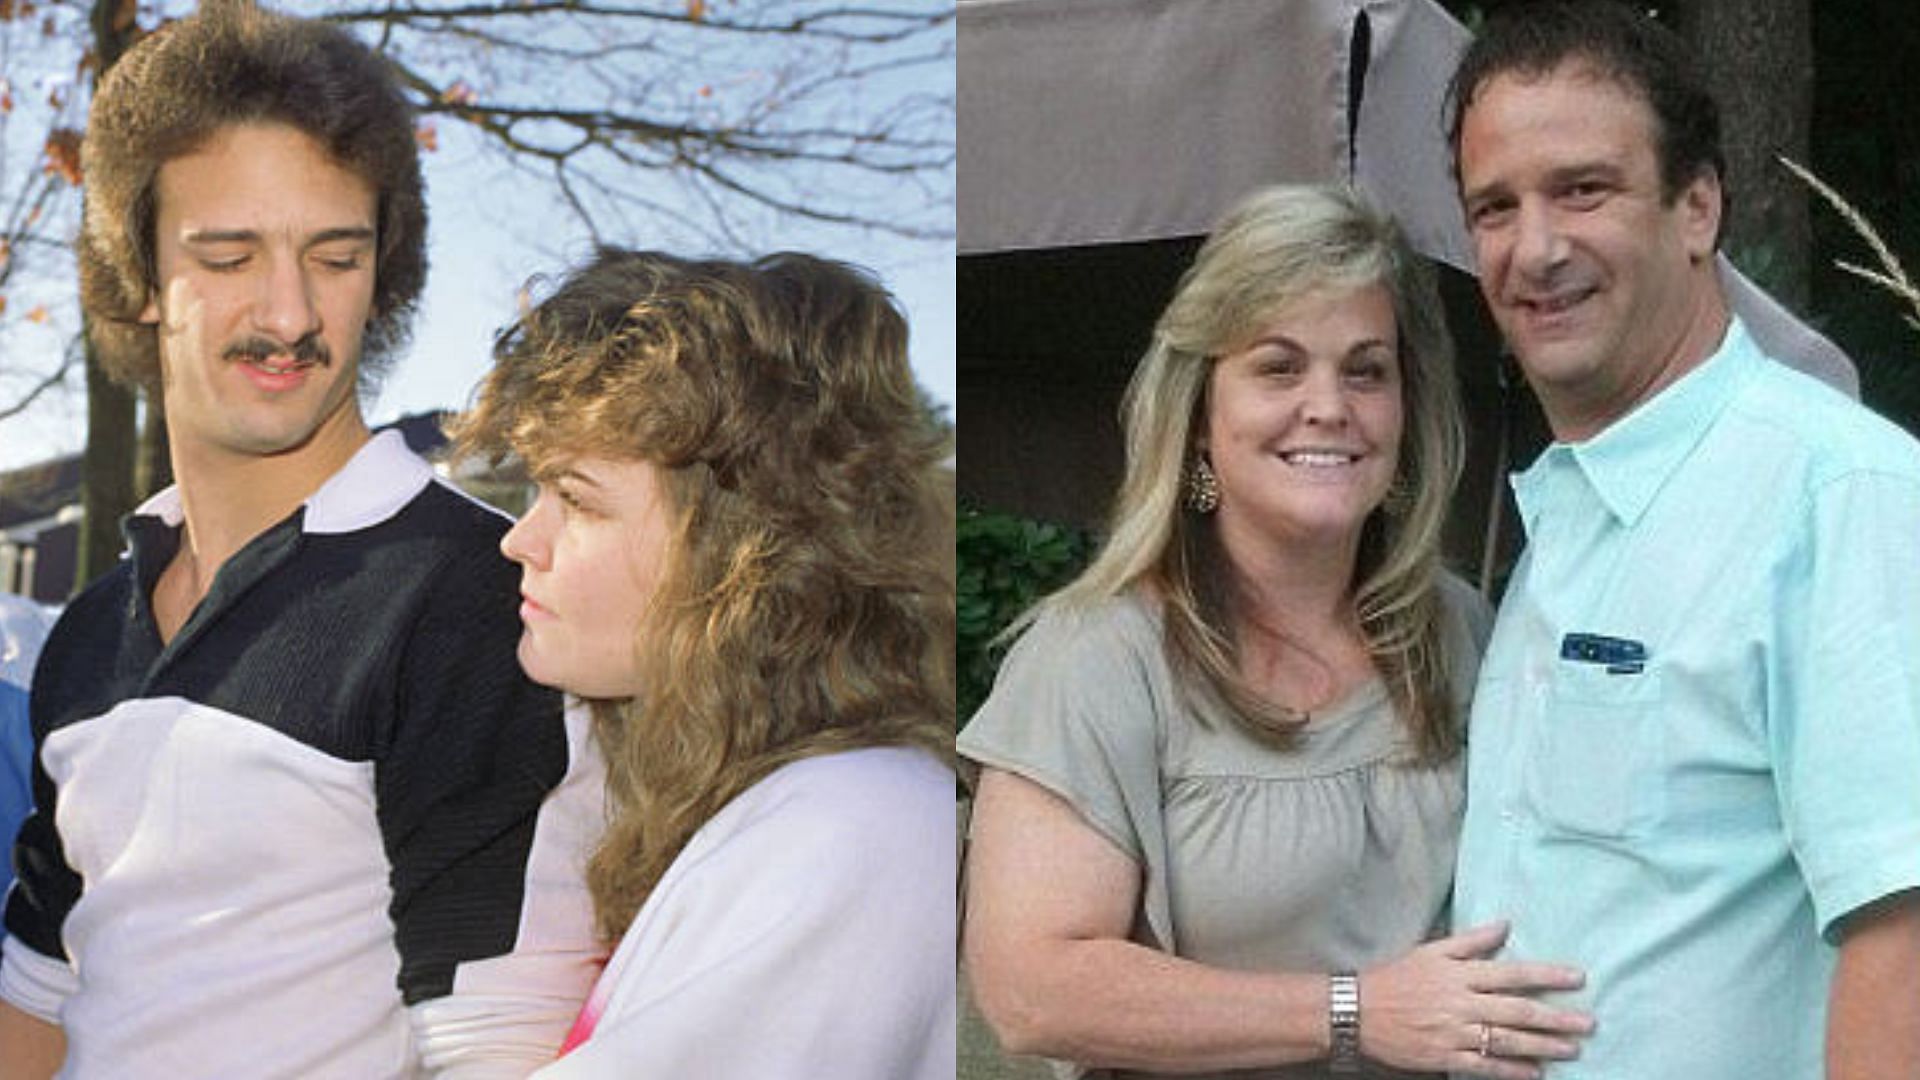 Cheryl Pierson with her then-boyfriend/now-husband, Rob Cuccio (Image via Bettmann/Getty Images, @infowe/Twitter)